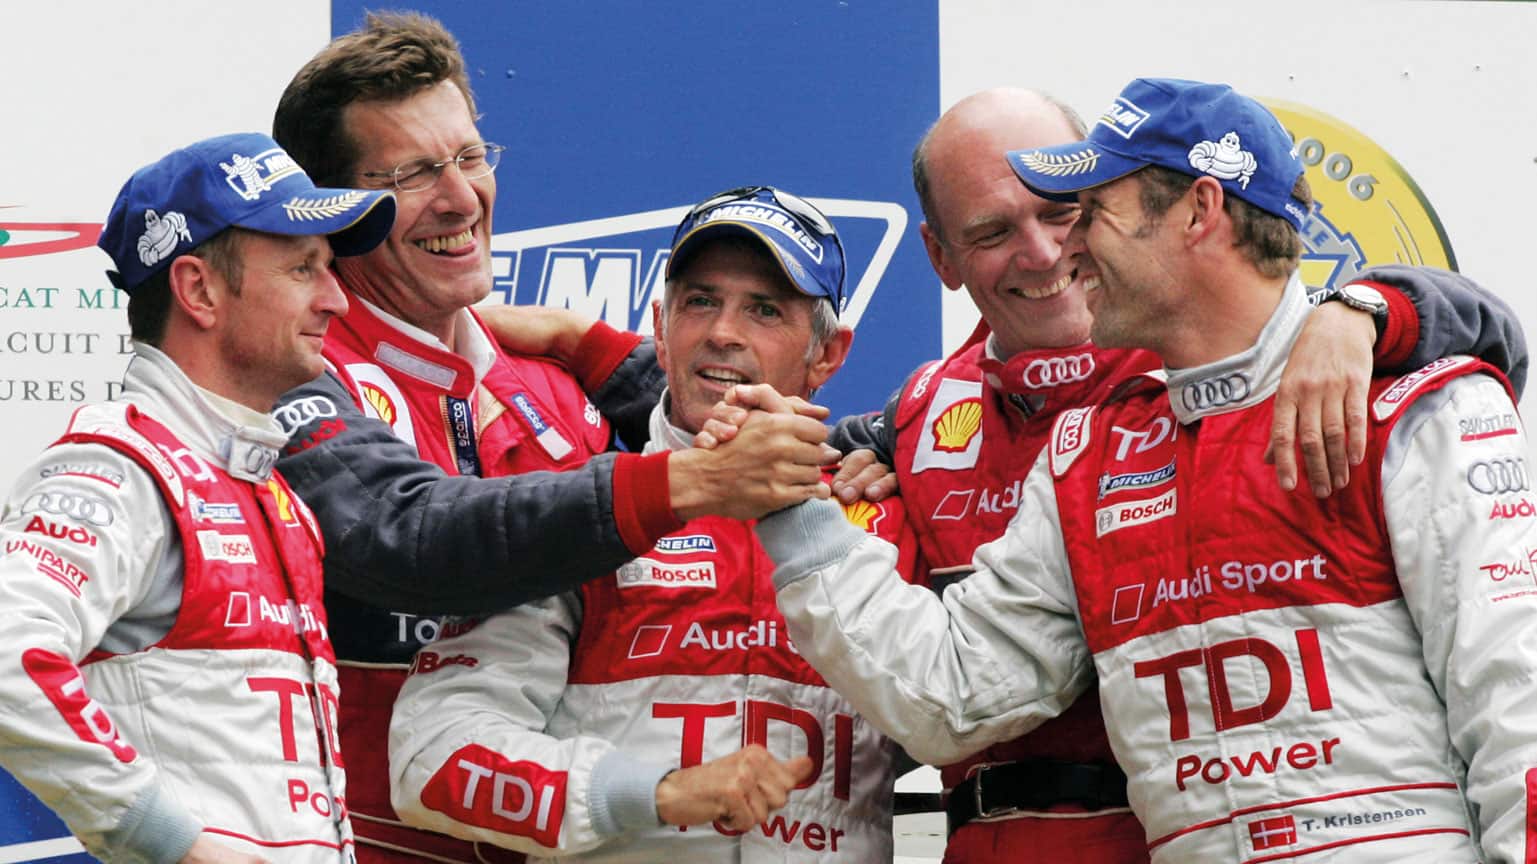 Adui team celeberate victory Le Mans 2008